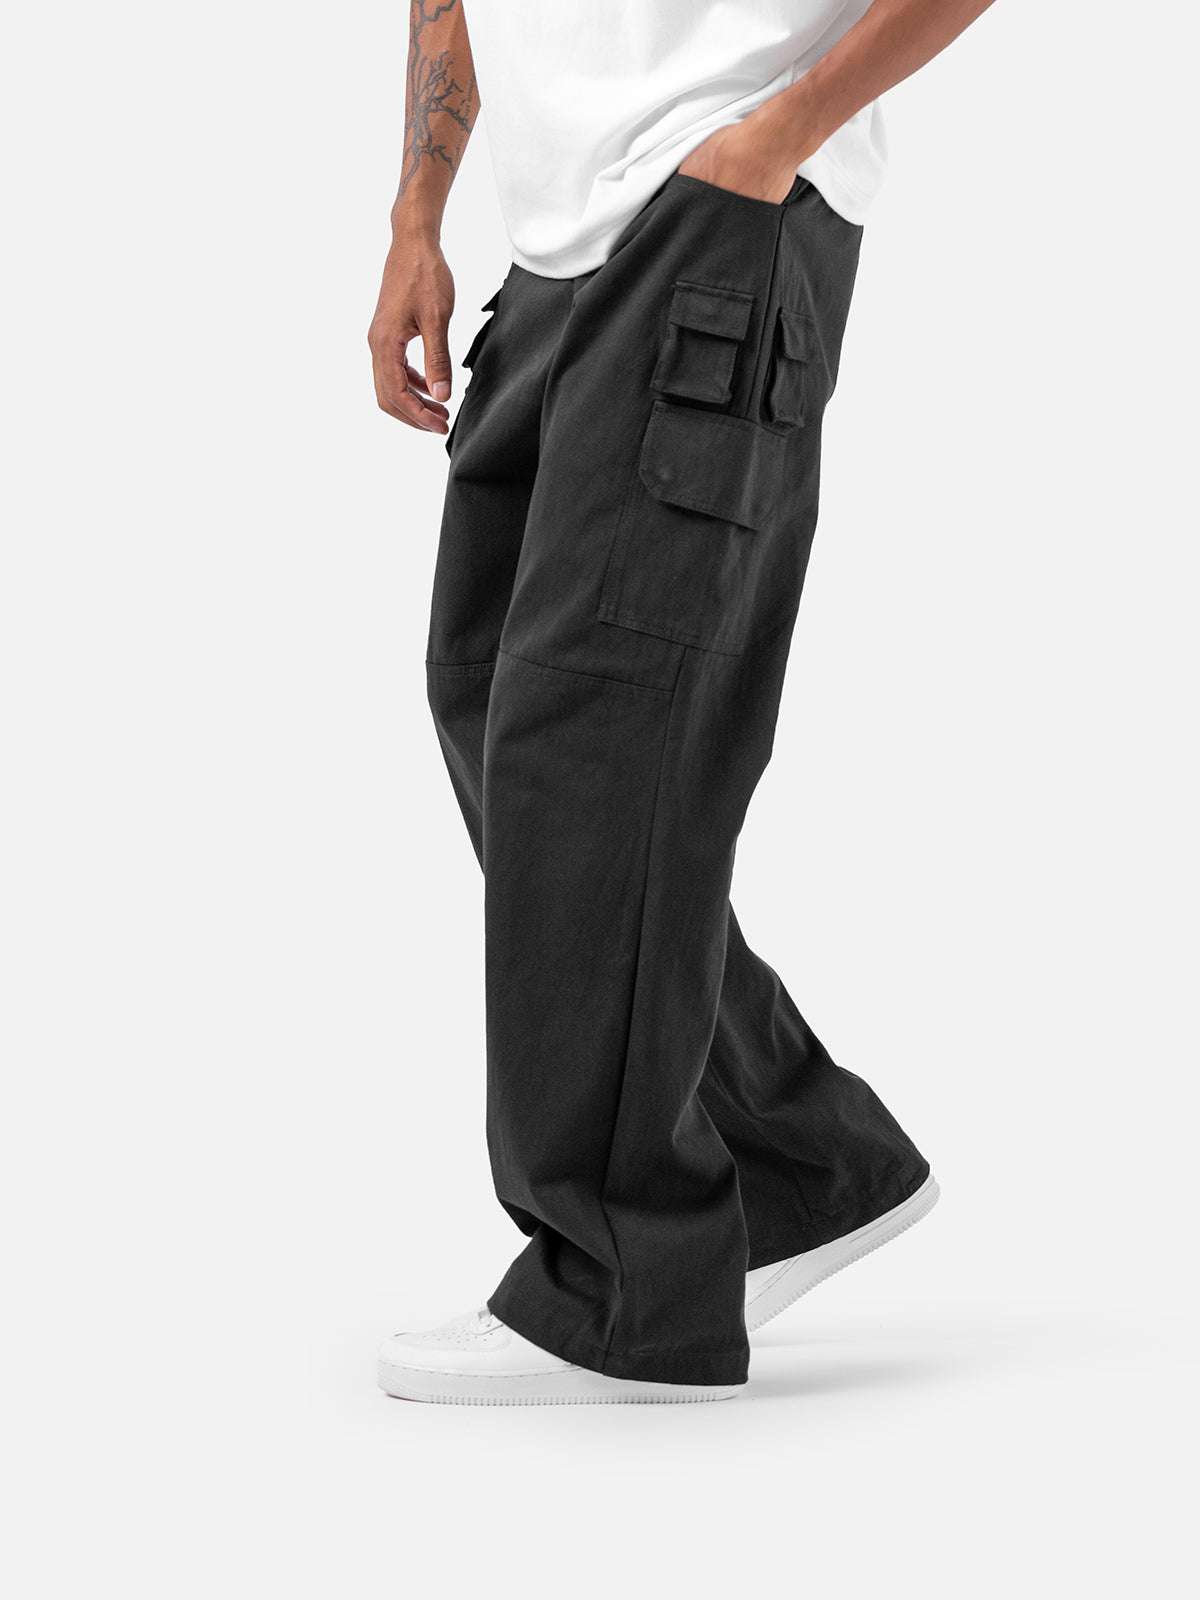 Quealent Mens Cargo Pants Men's Extreme Flat Front Regular